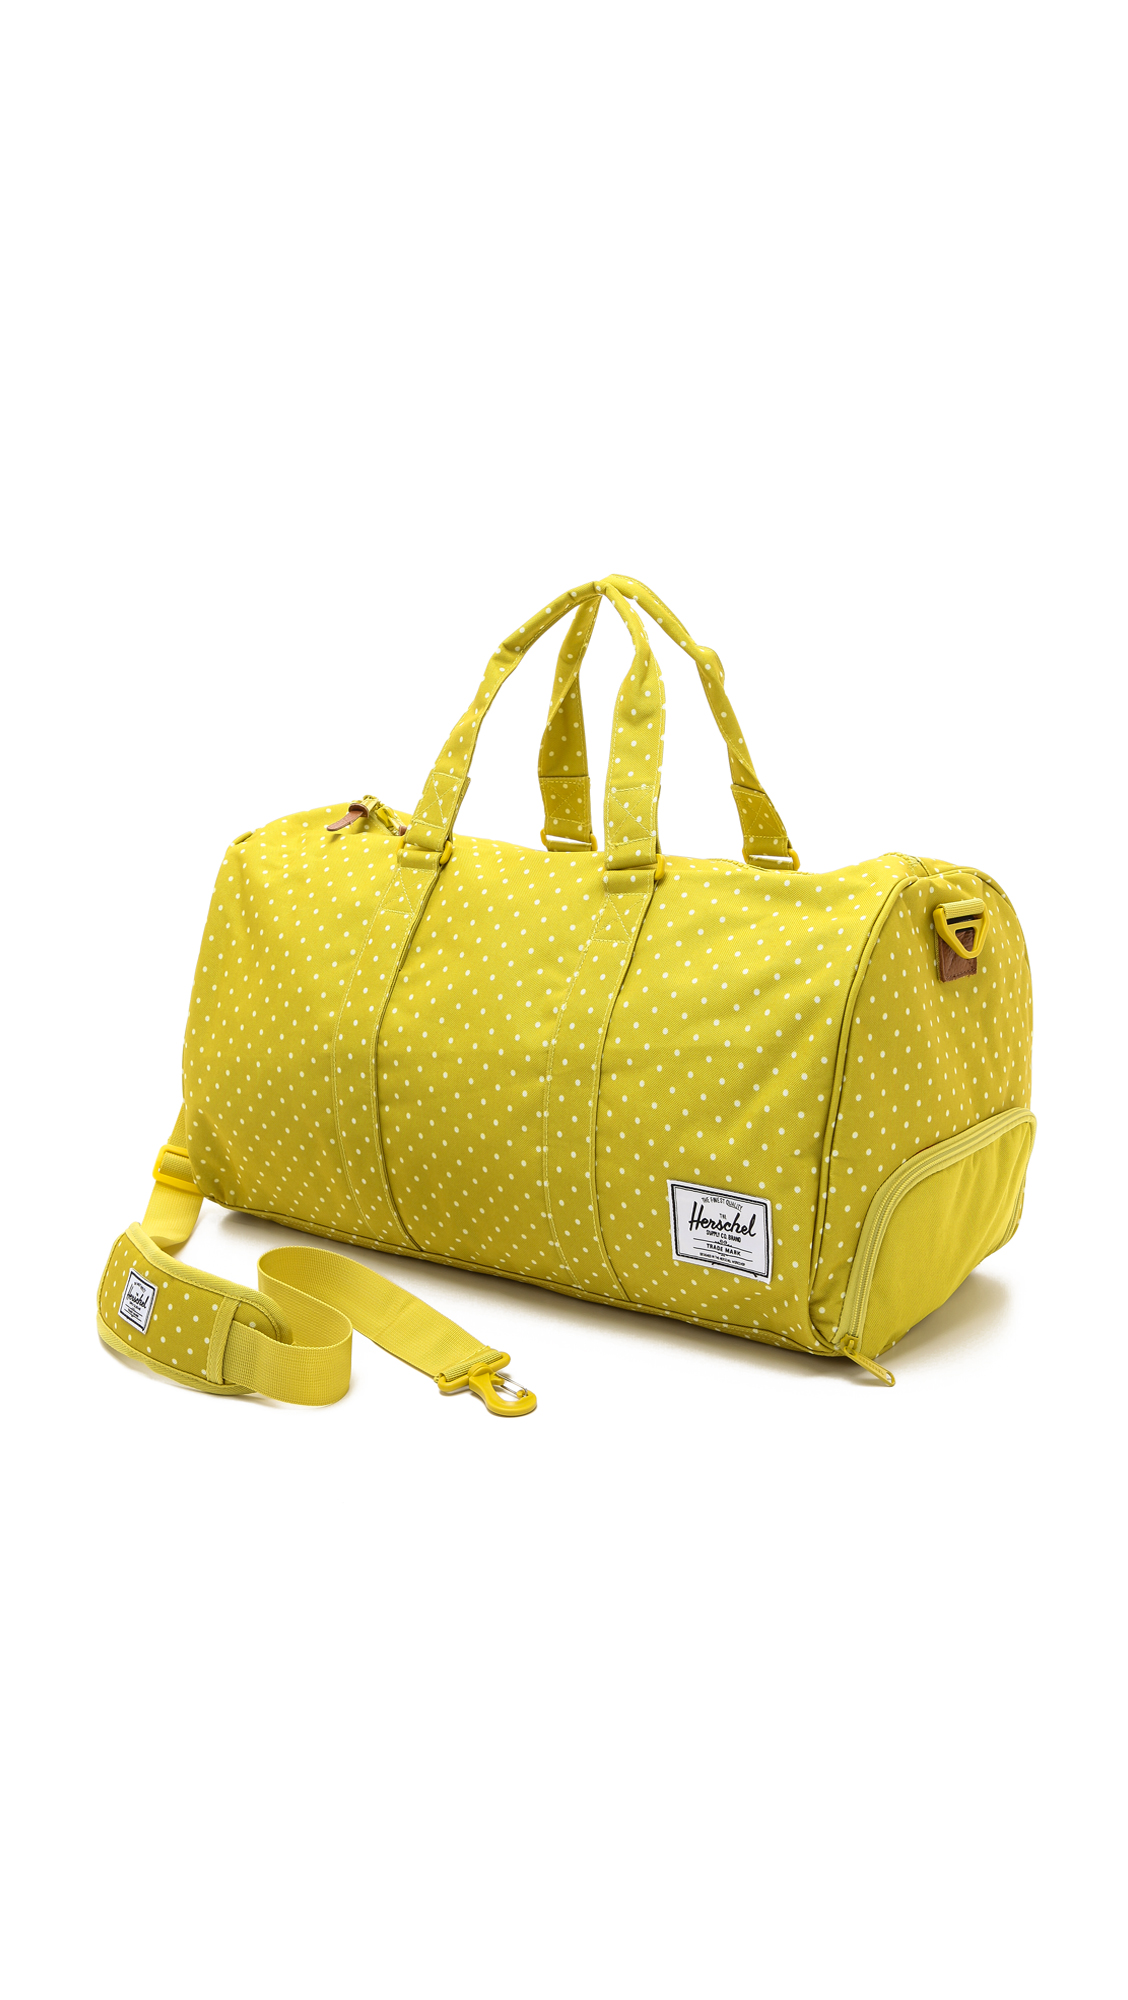 Herschel Supply Co. Novel Weekender Duffel Bag in Yellow - Lyst